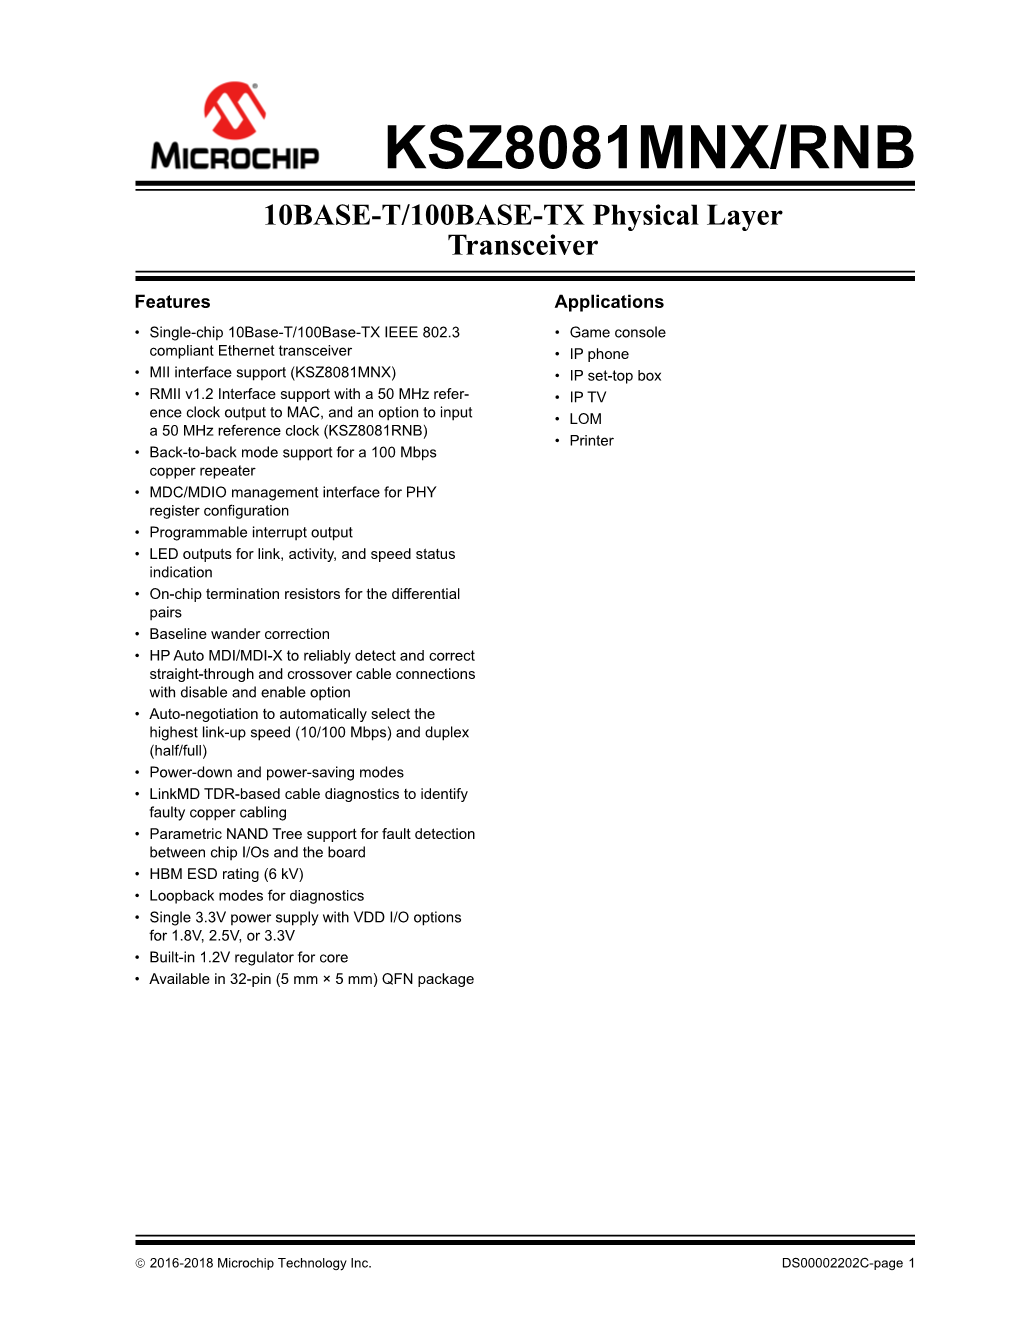 KSZ8081MNX/RNB Data Sheet